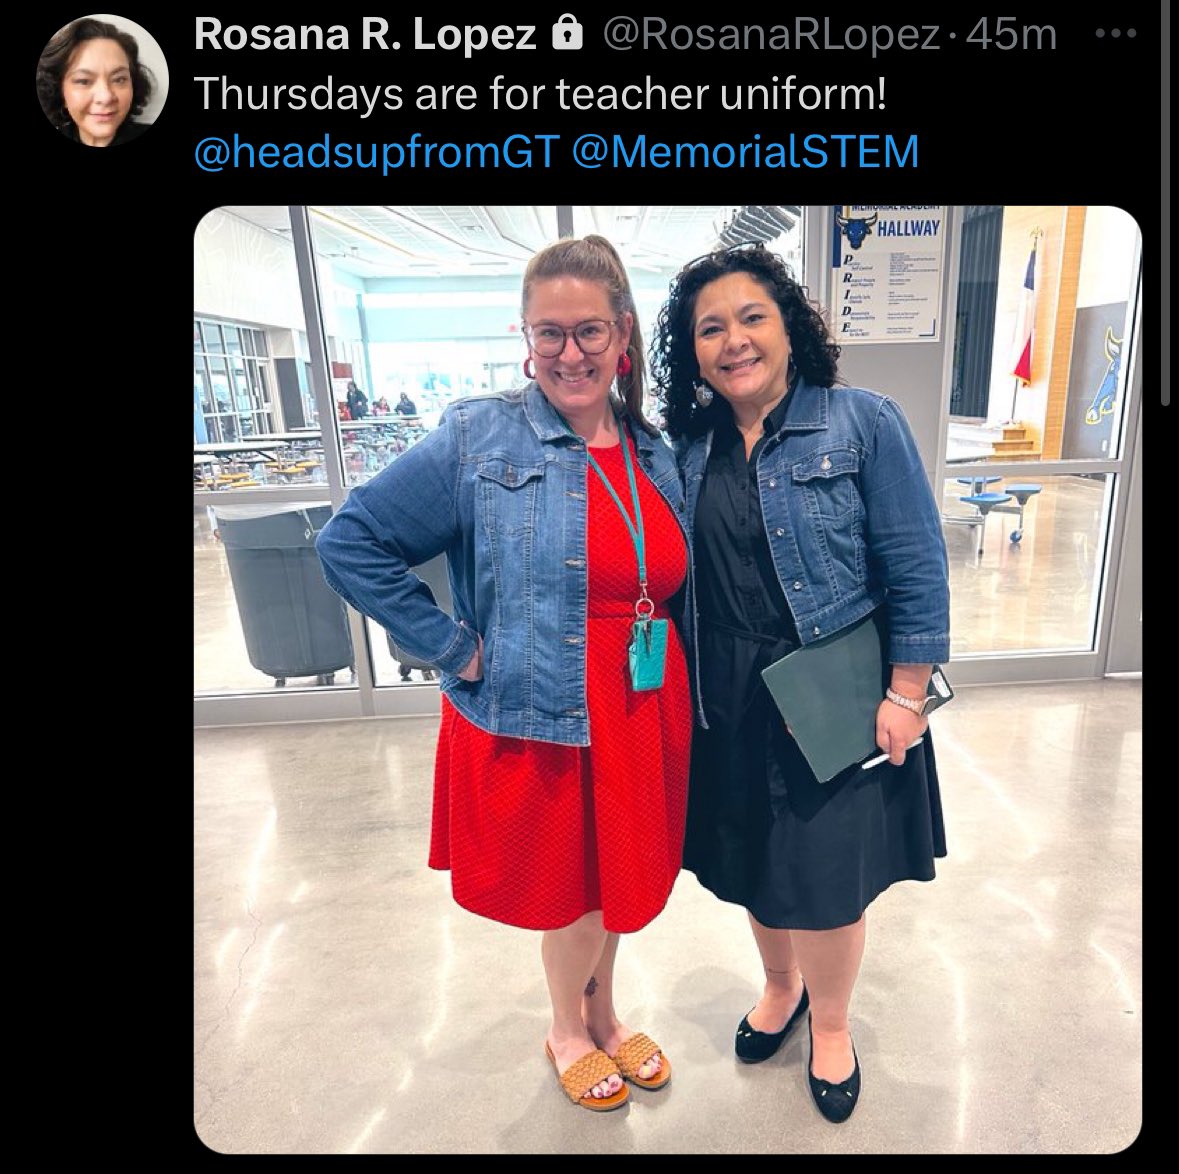 Twinning on a Thursday in our quintessential teacher outfits: dress + denim jacket 💙@RosanaRLopez